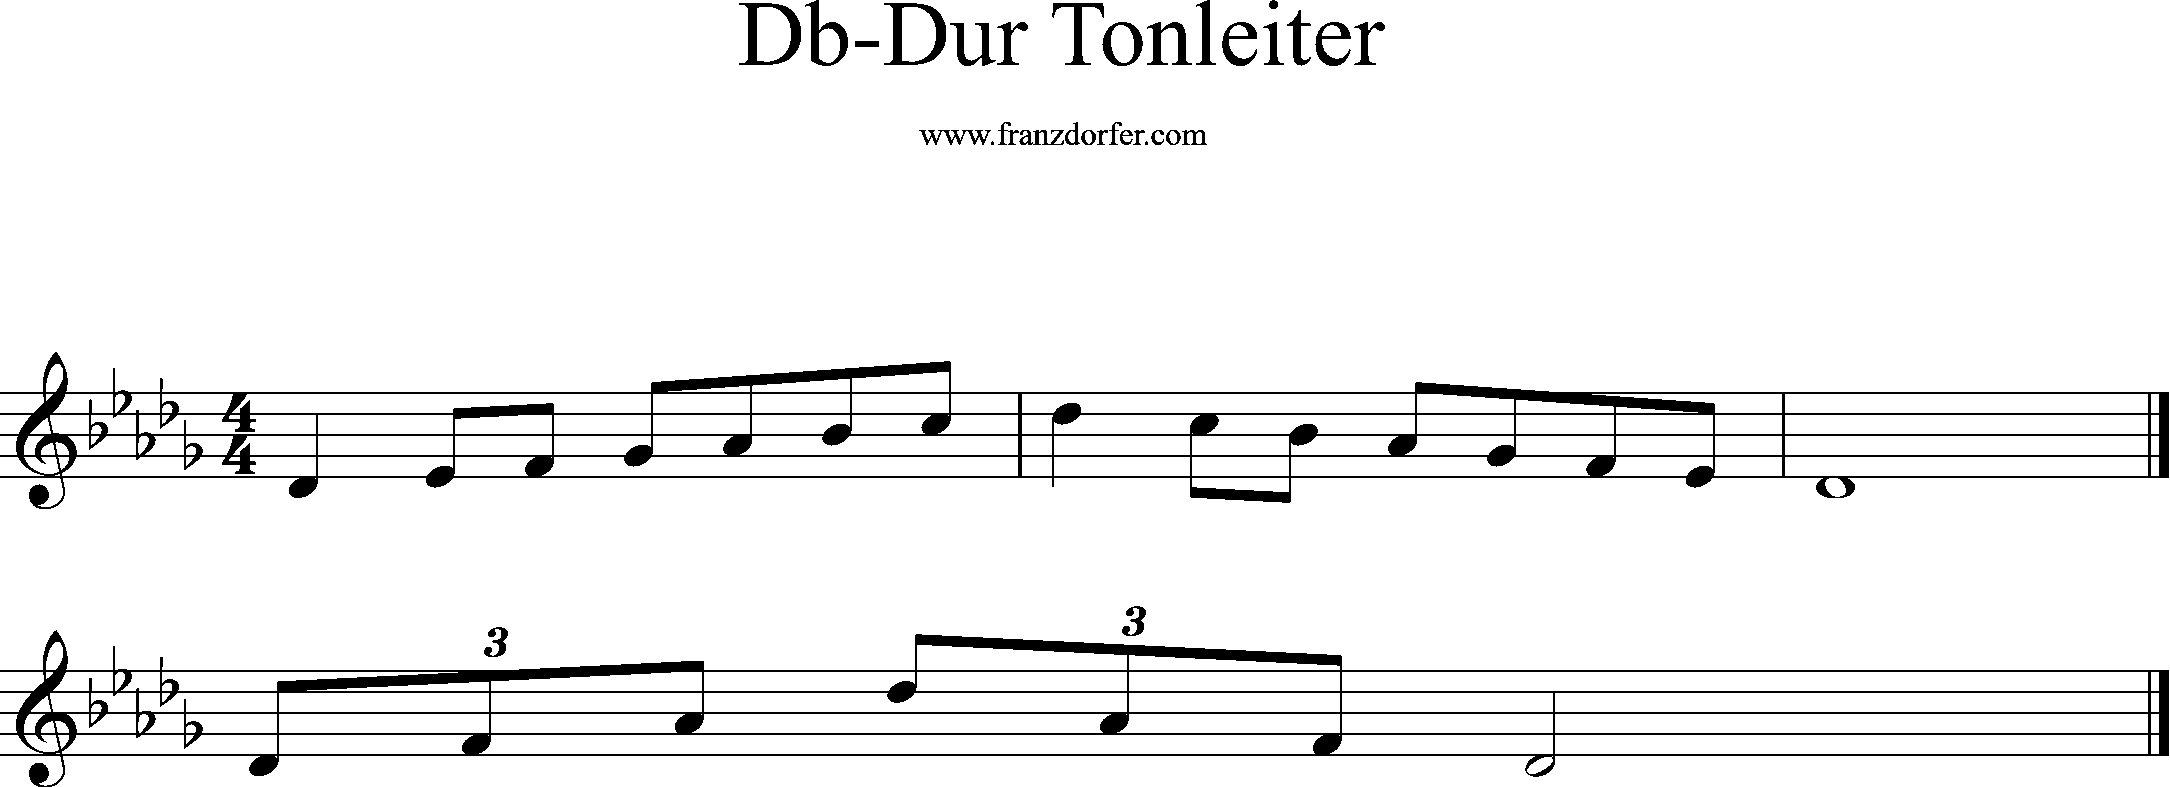 db-dur tonleiter, treble clef, db1-db2